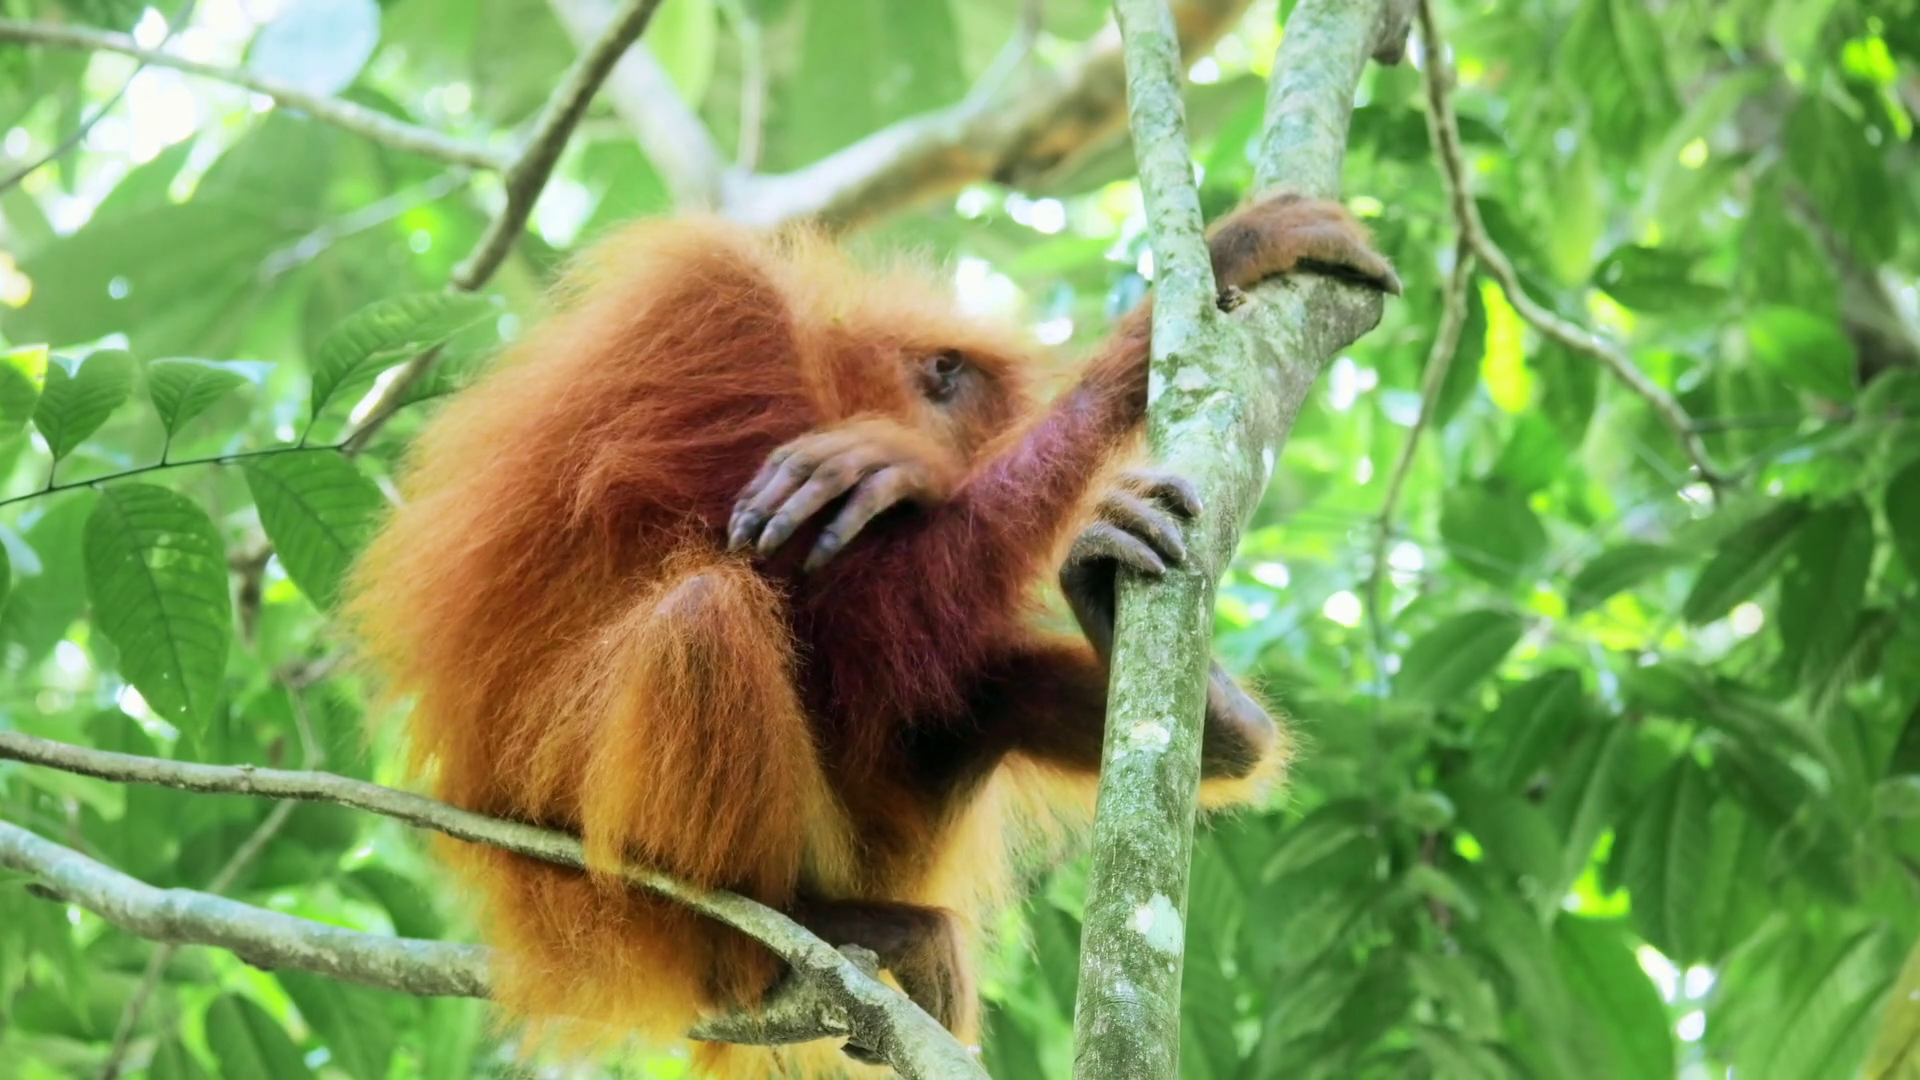 Cute funny orangutan young monkey sleeping among tree branches in ...